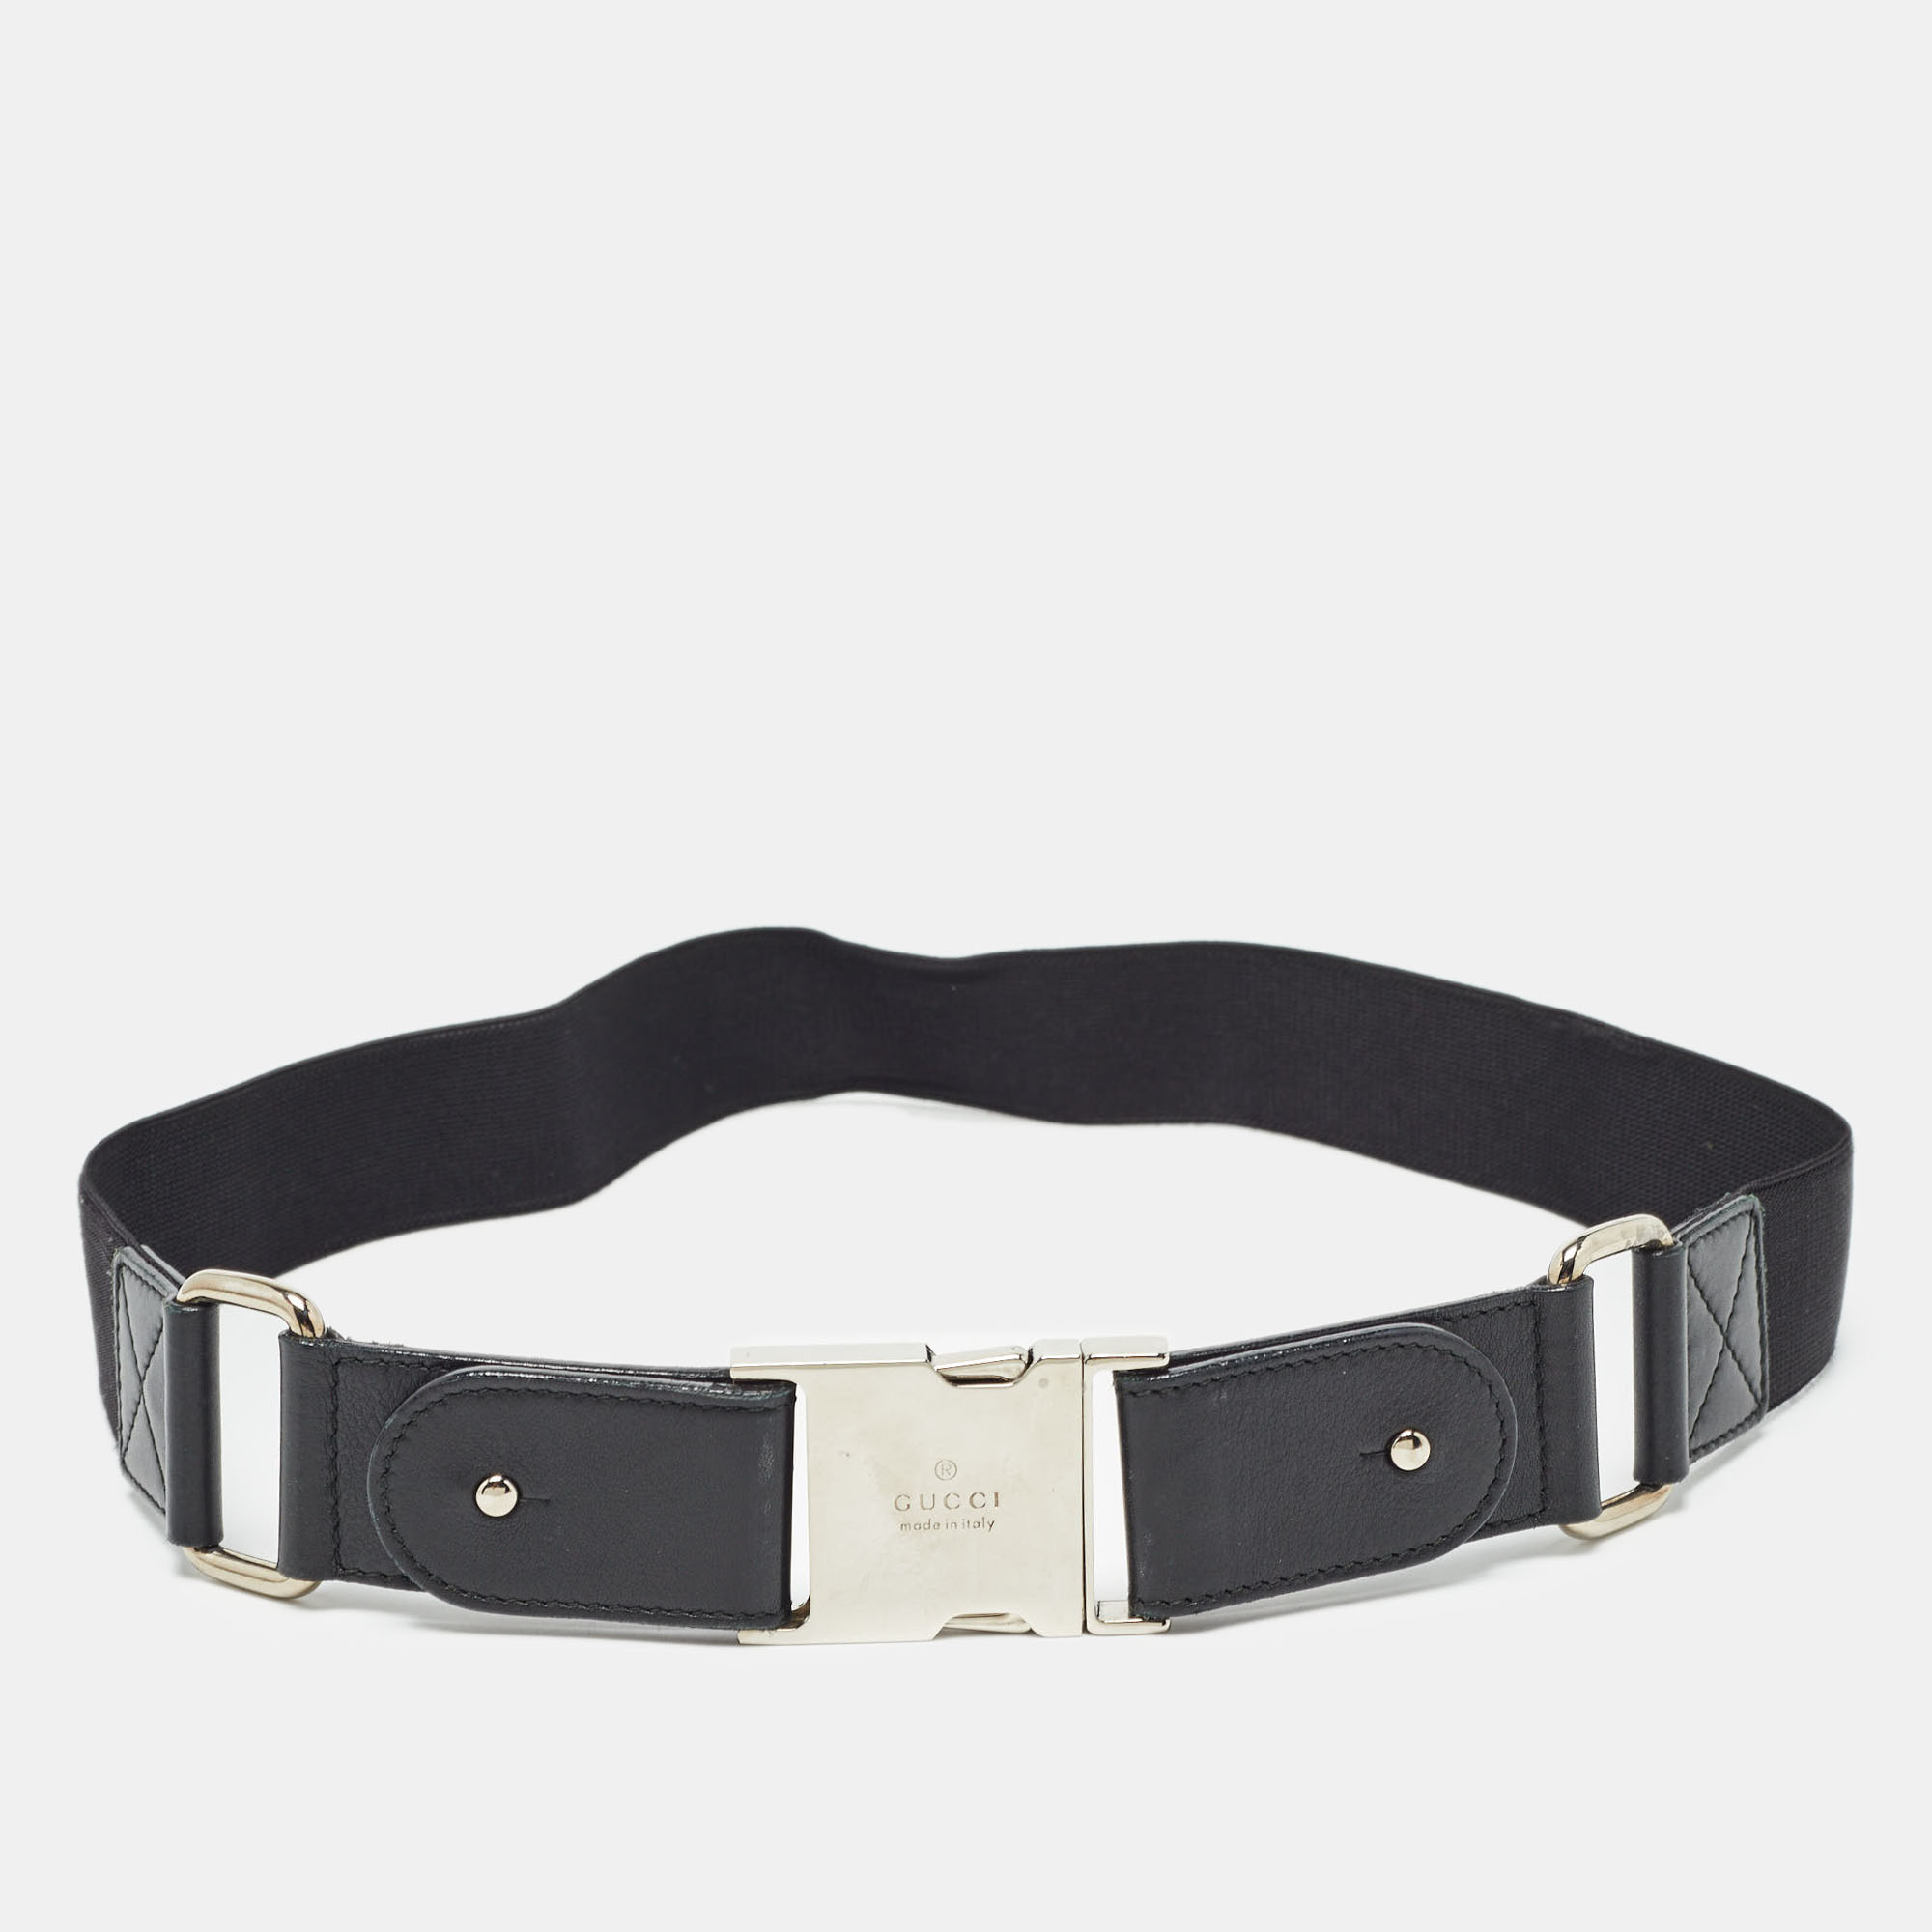 Gucci black elastic band and leather logo belt 80cm